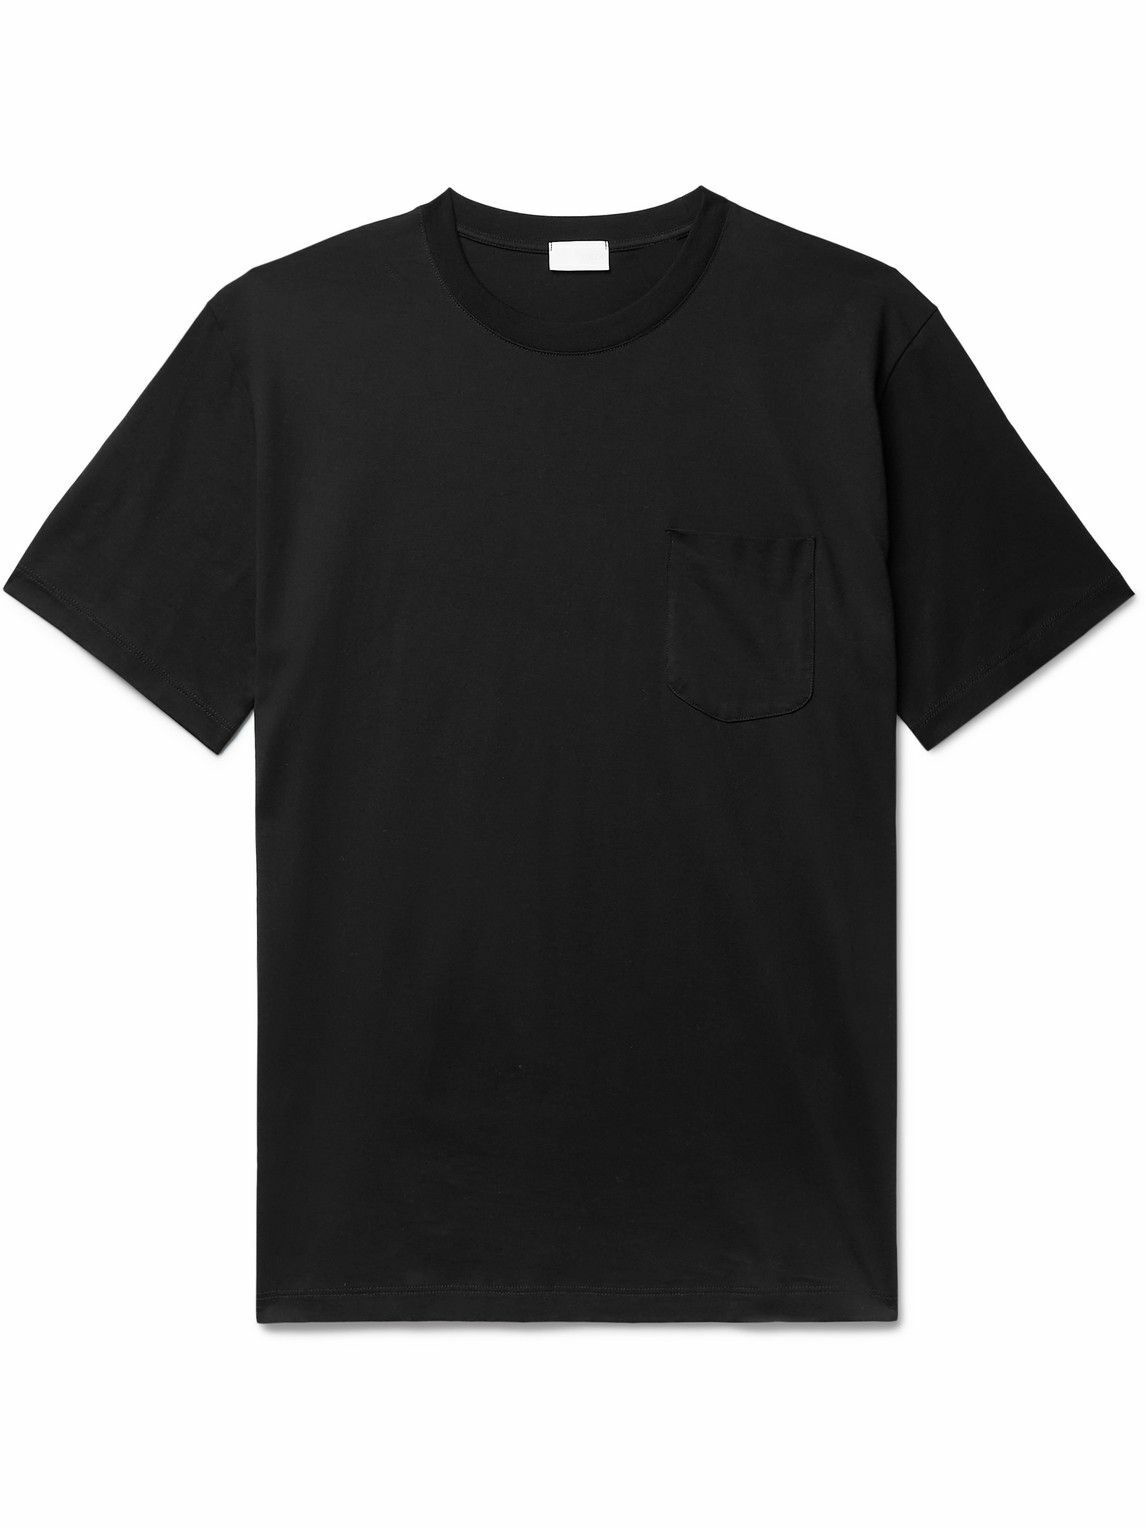 Handvaerk - Pima Cotton-Jersey T-Shirt - Black Handvaerk